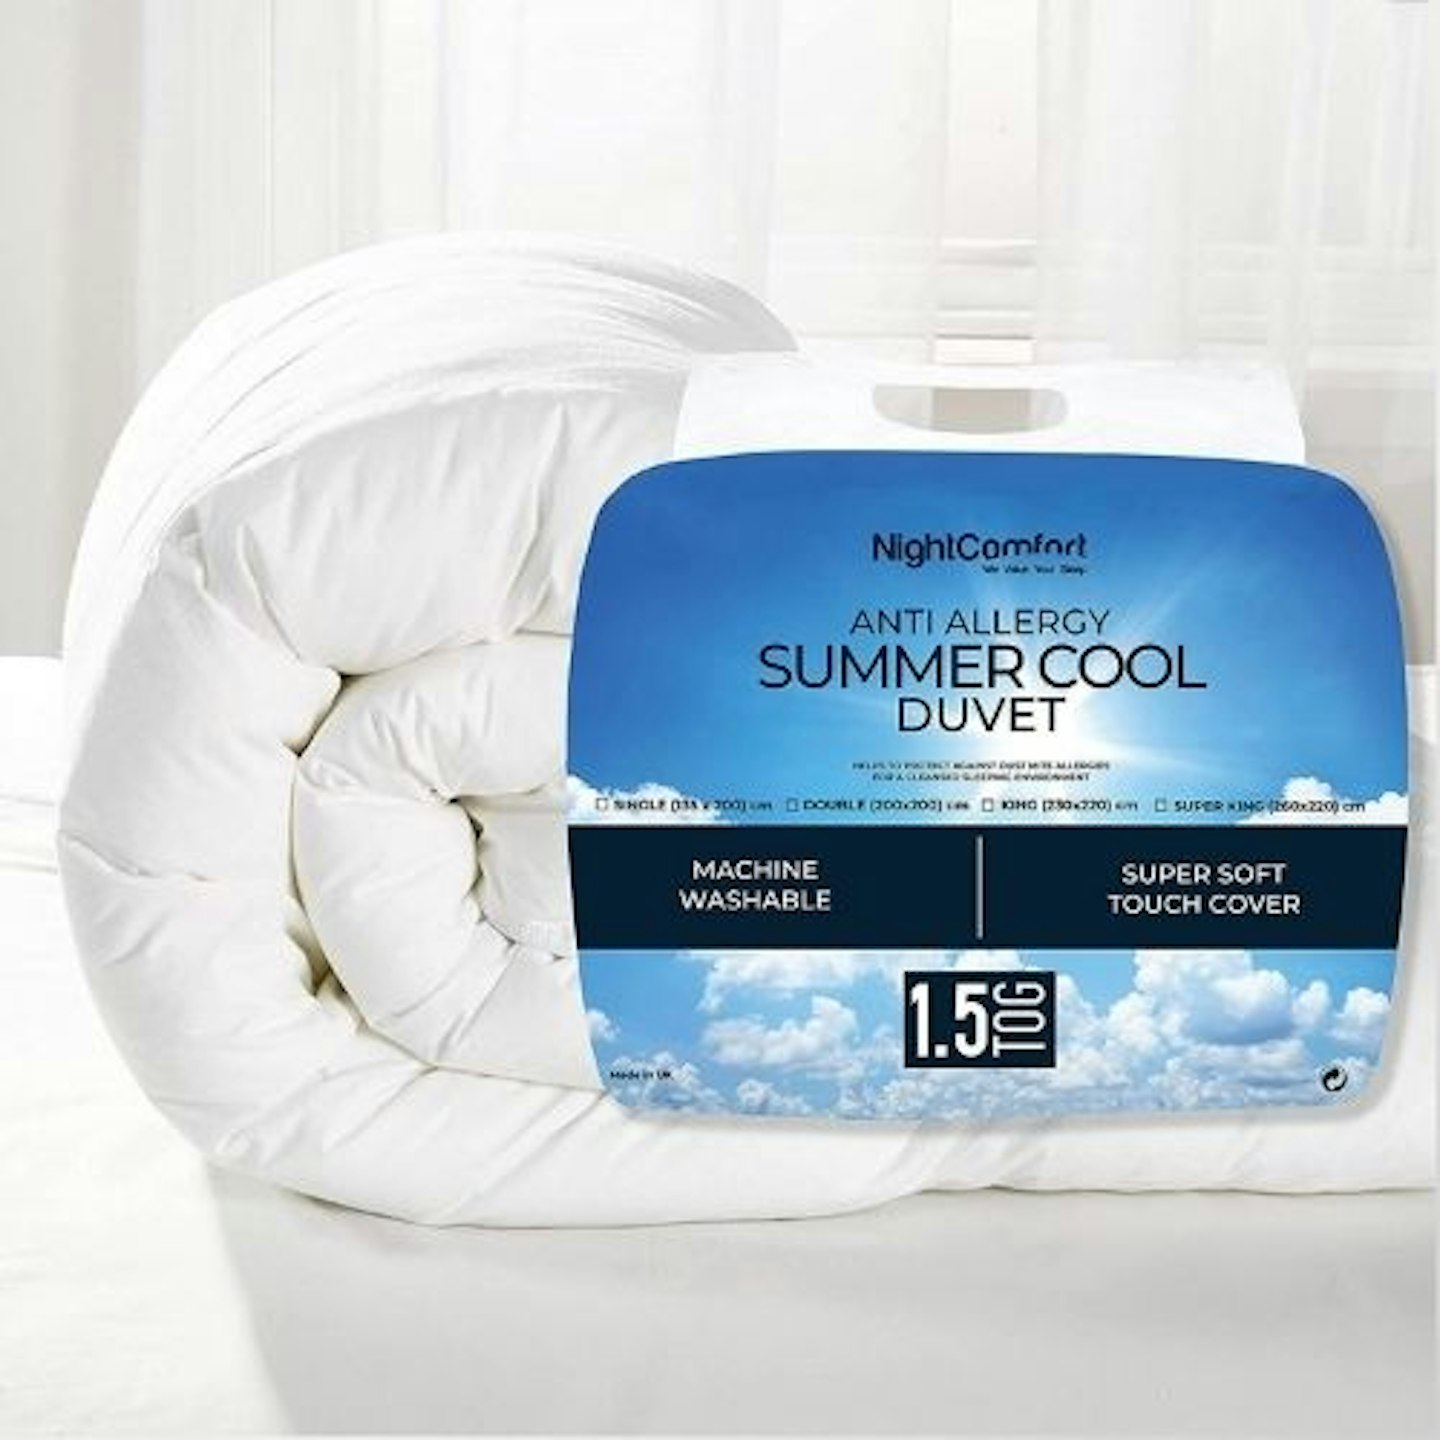 Night Comfort Anti-Allergy Summer Cool Duvet